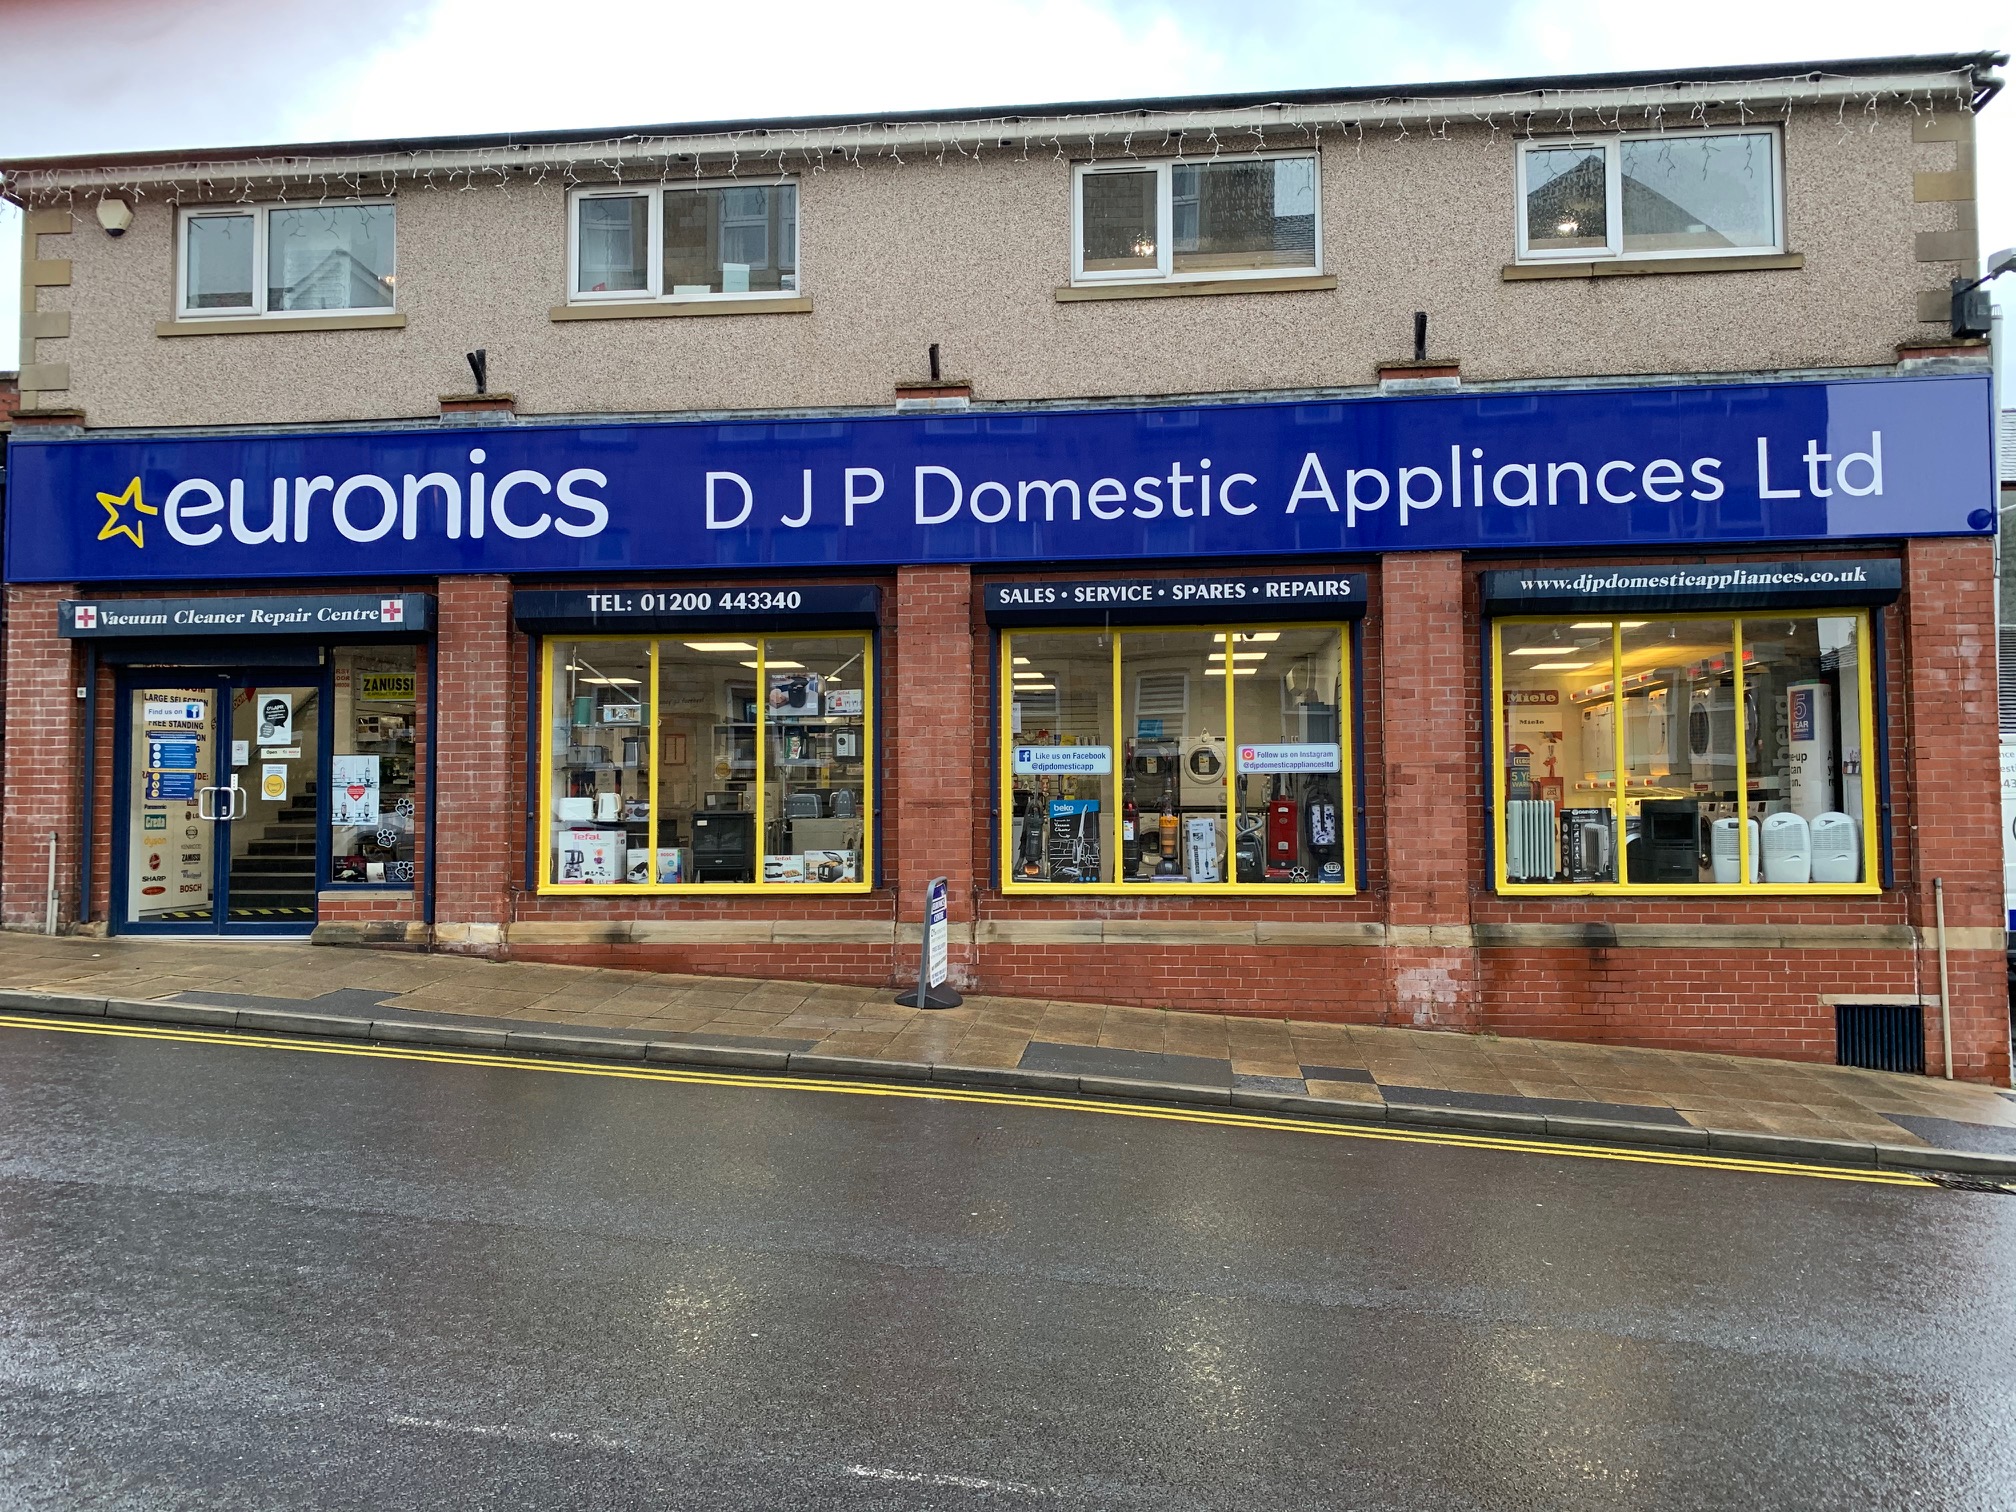 DJP Domestic Appliances Ltd